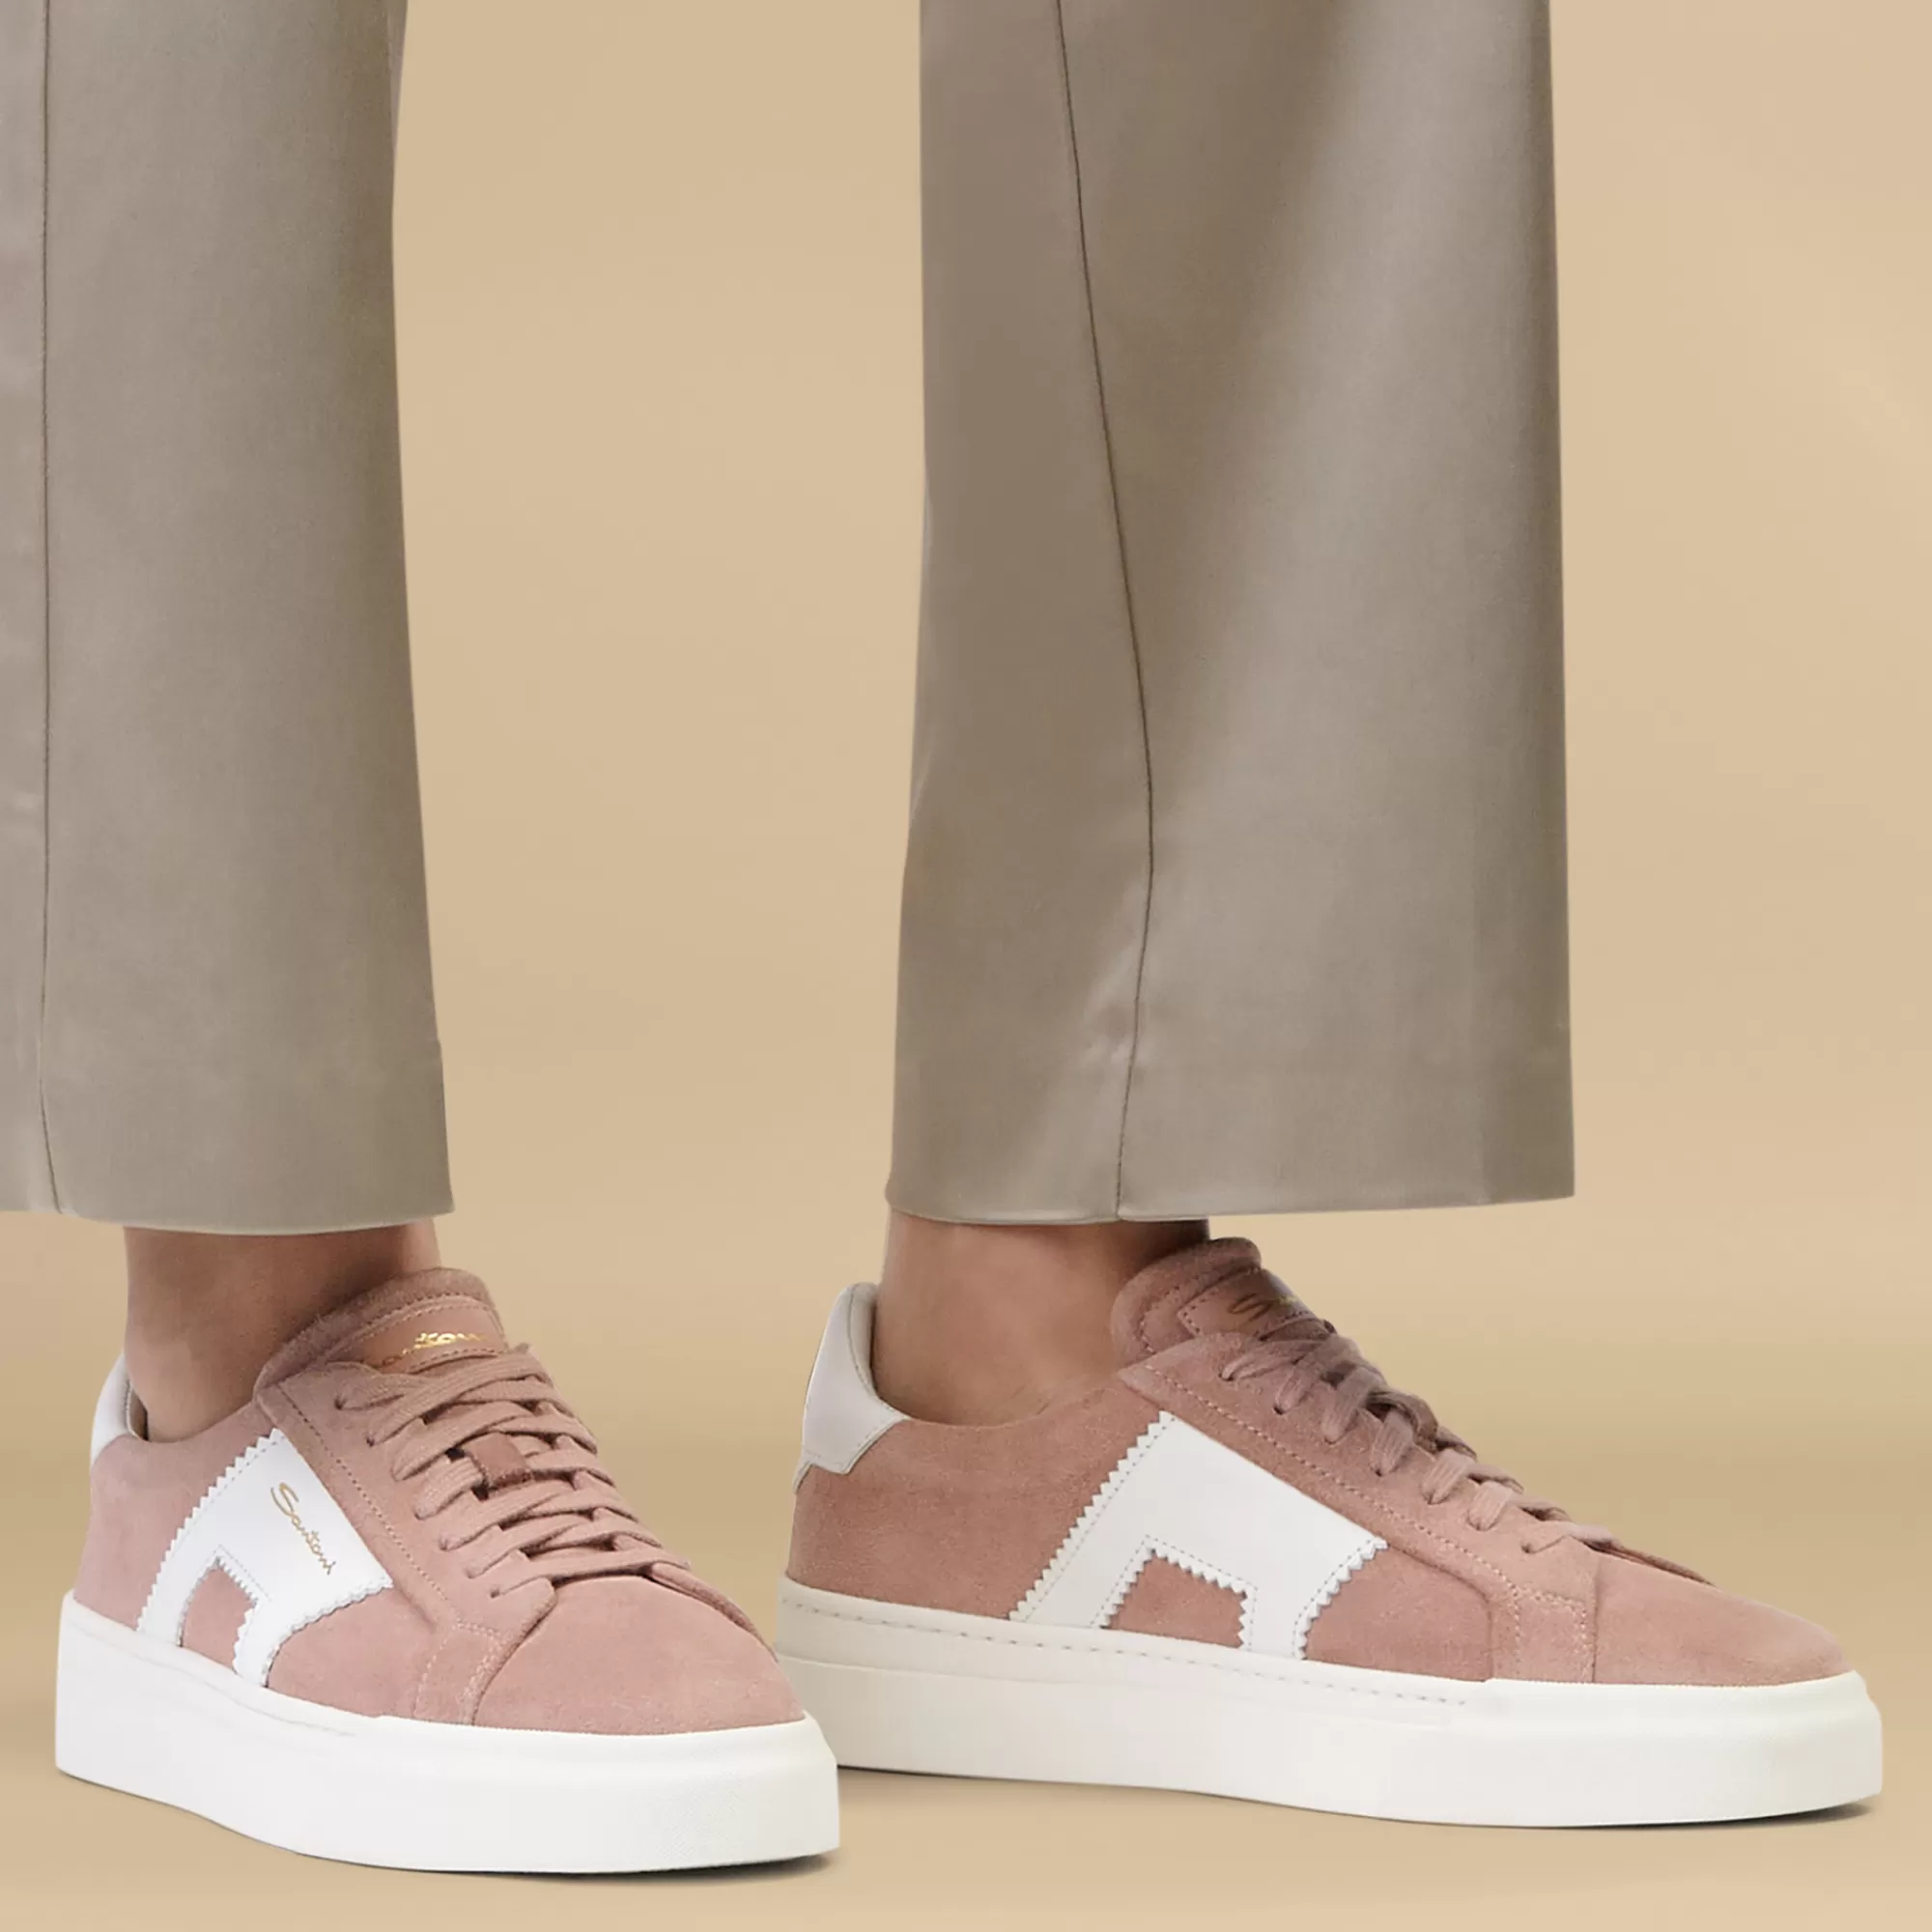 Clearance Double buckle sneaker da donna in suede e pelle rosa e bianca Vedi tutte le calzature | Sneakers